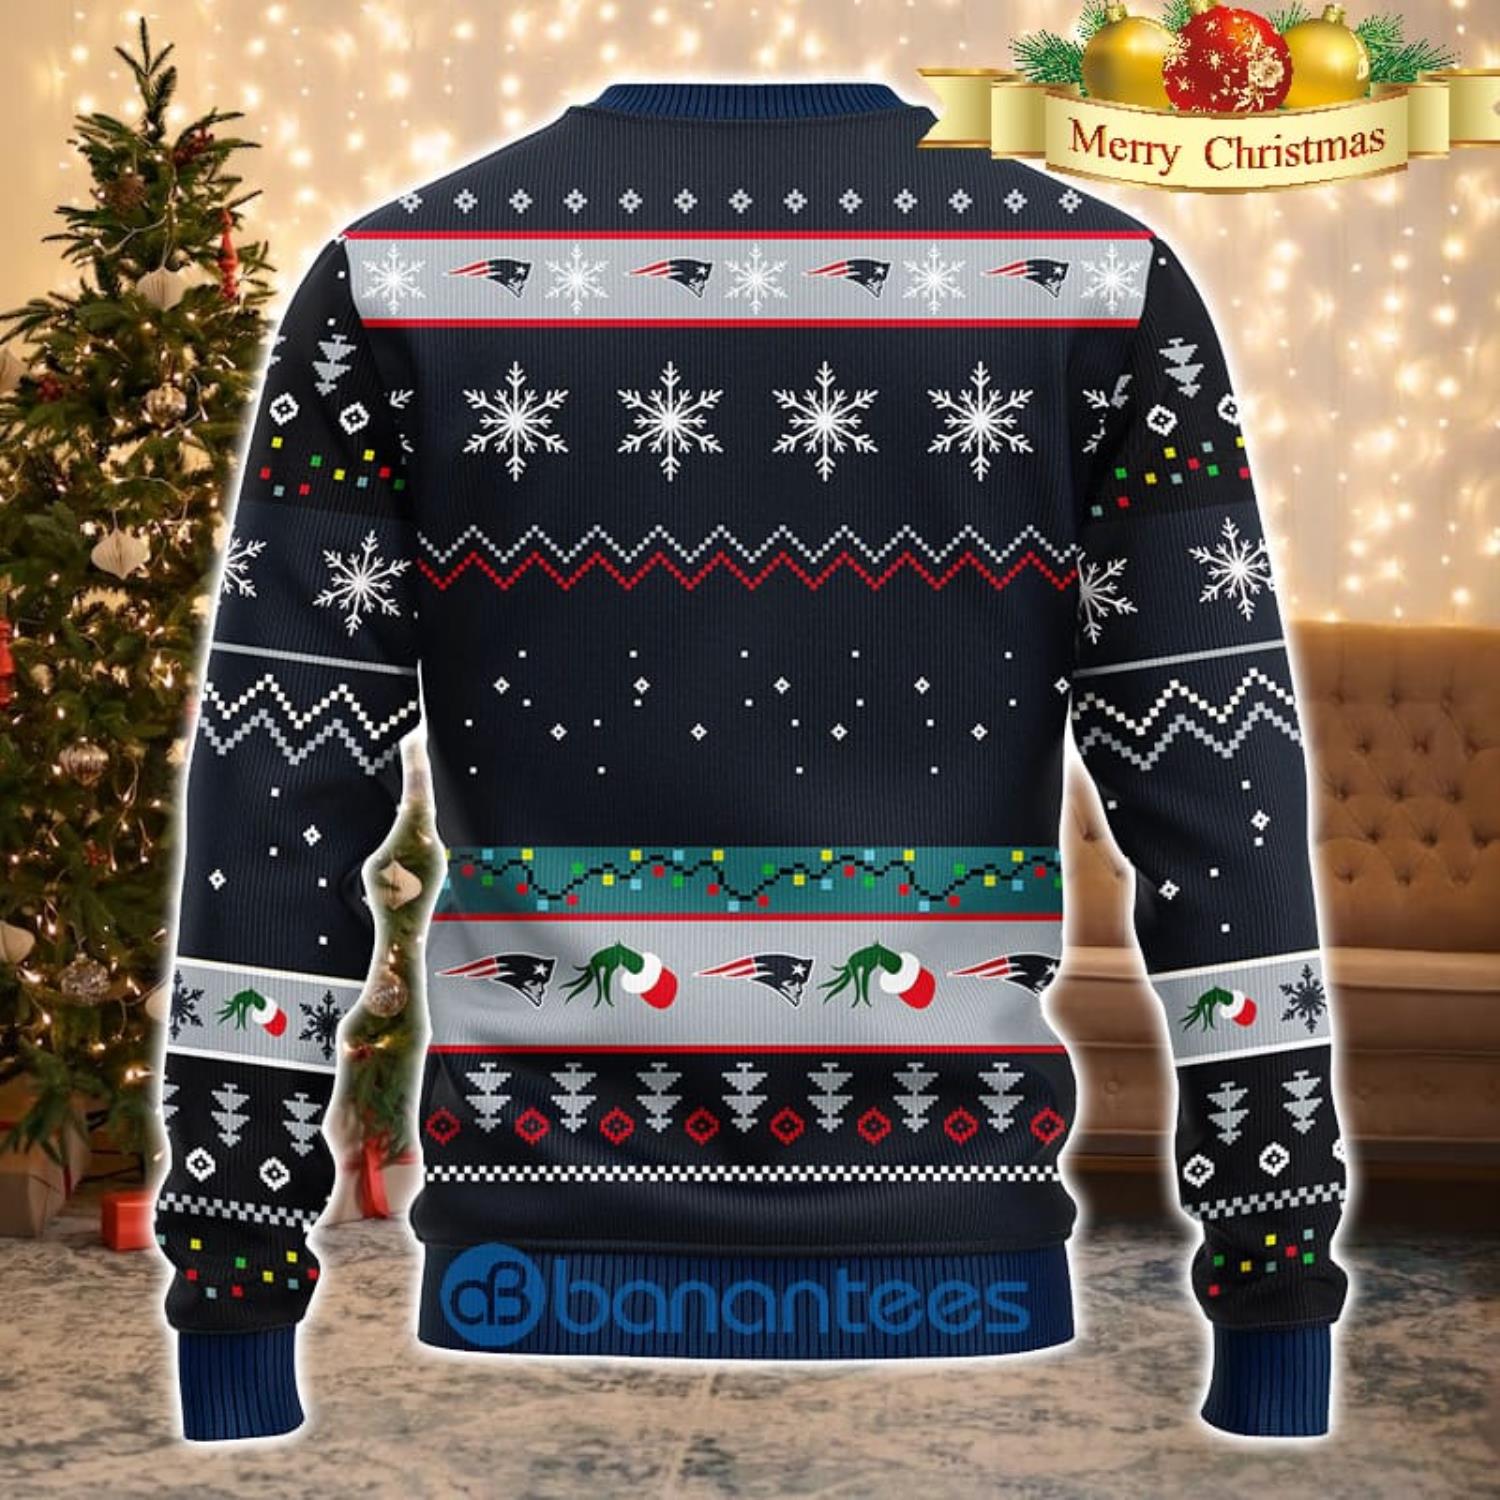 New England Patriots Womens Christmas Sweater – Ugly Christmas